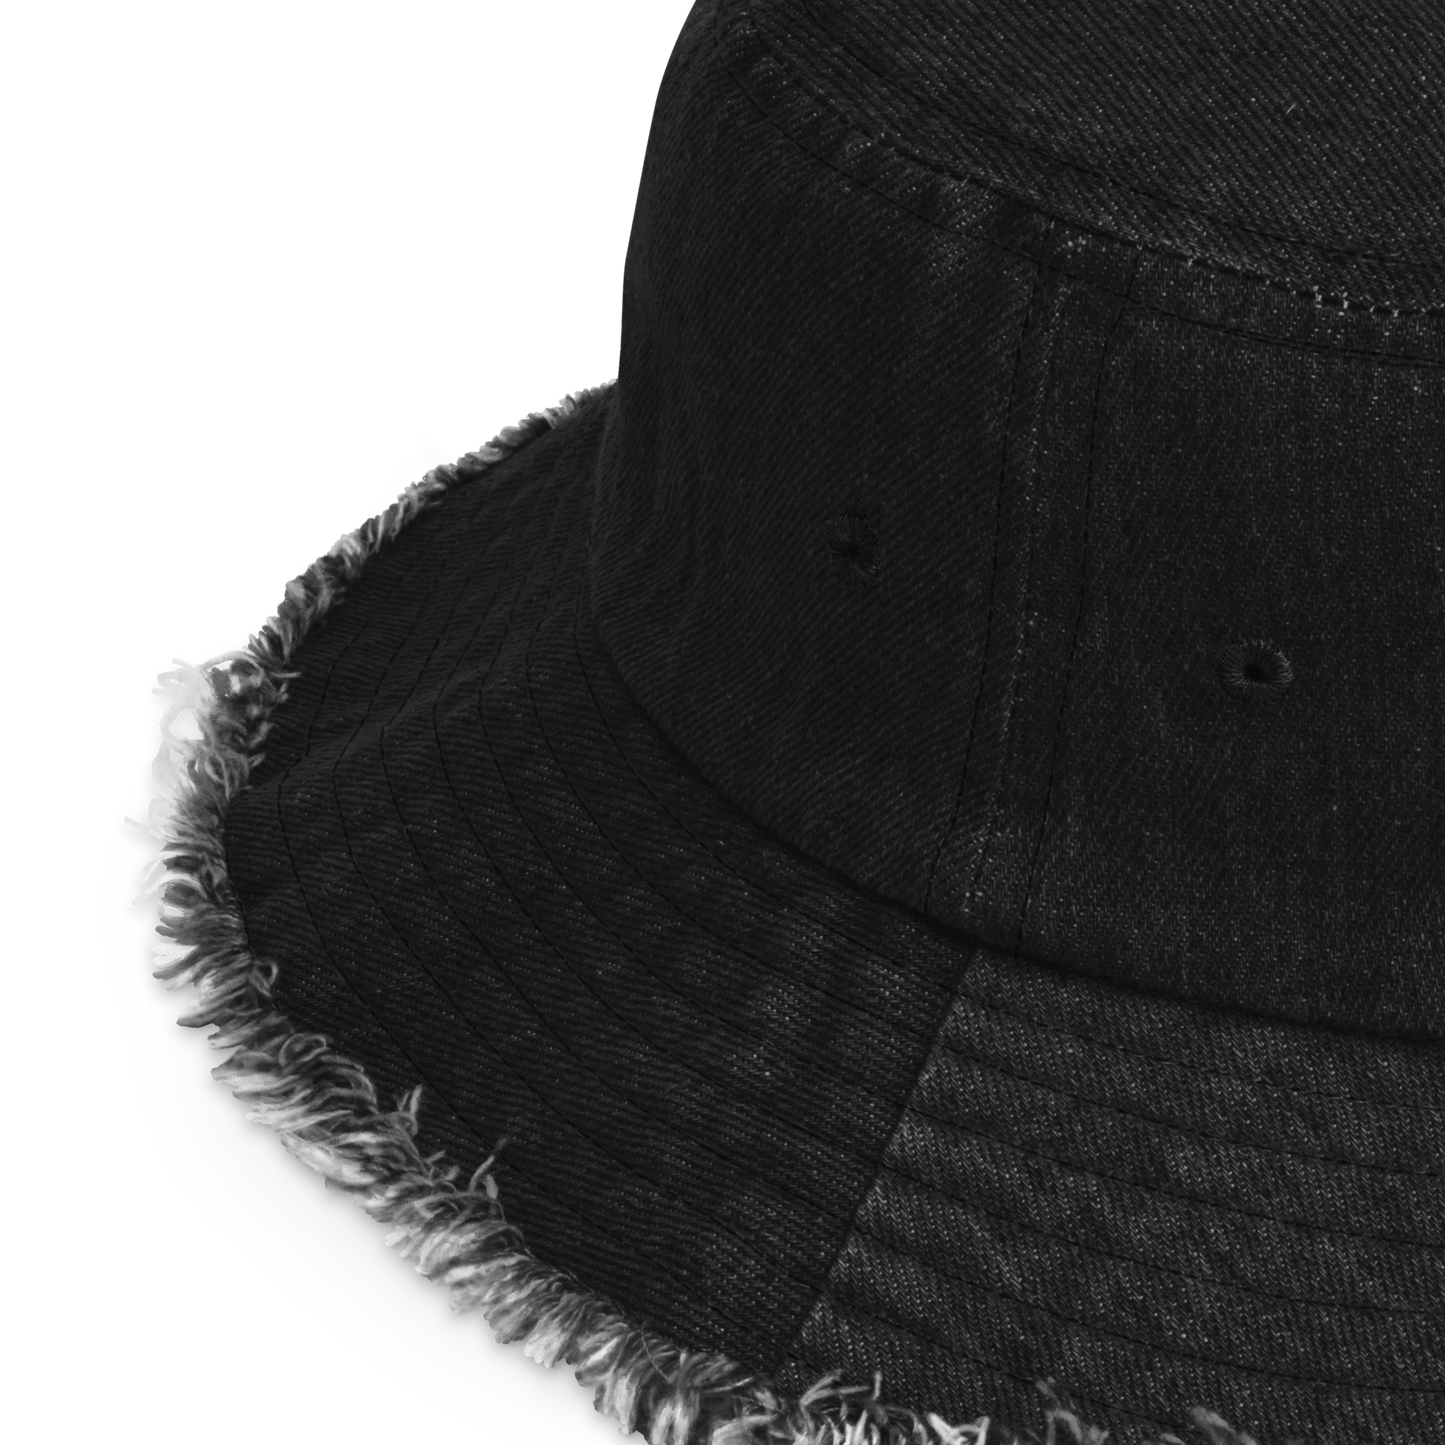 Black Power Fist Distressed Denim Bucket Hat